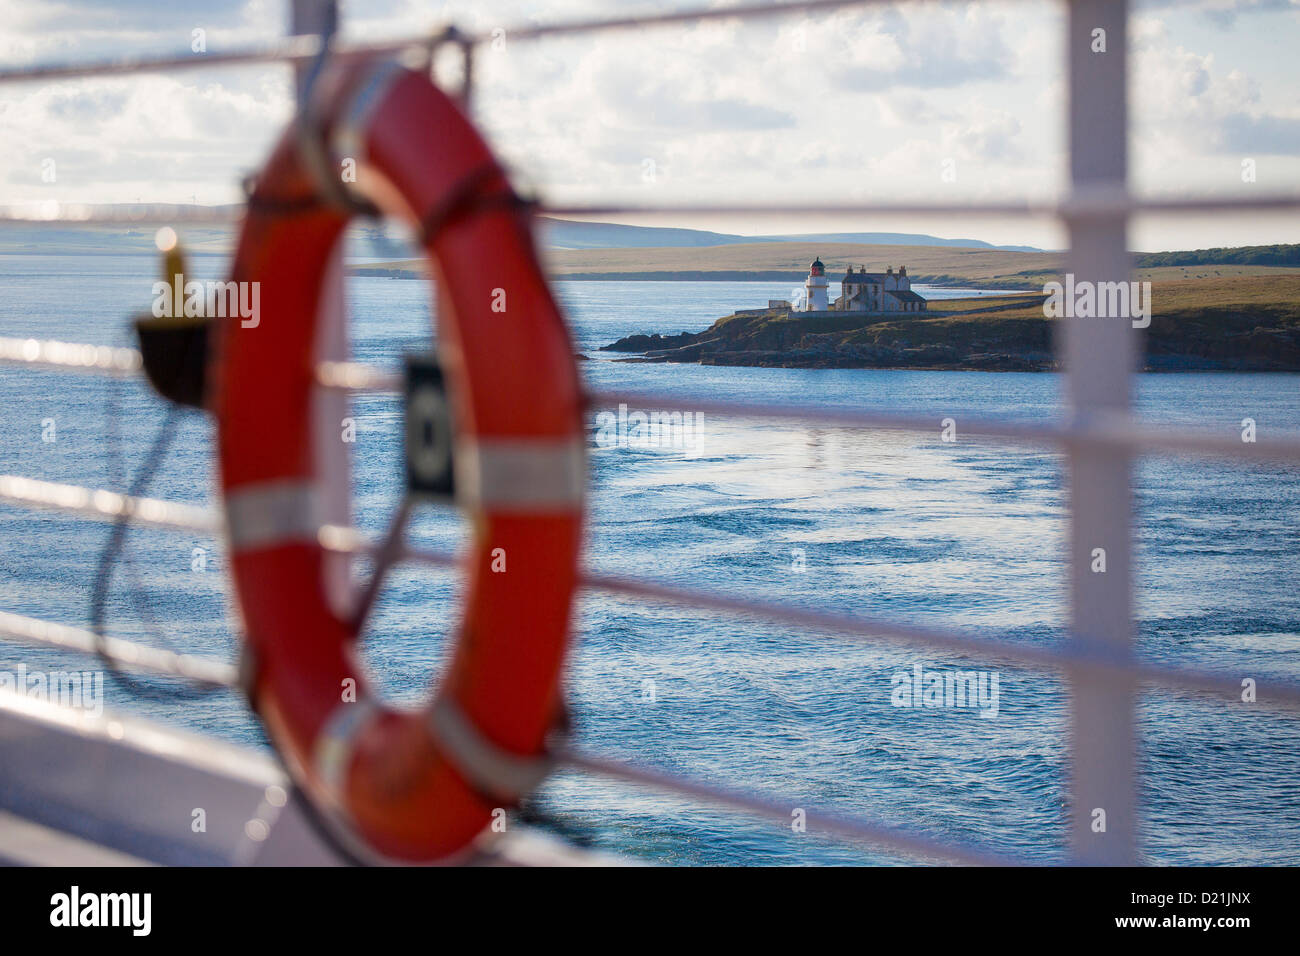 Lifering aboard cruise ship Azamara Journey, Azamara Club Cruises and Lighthouse of the Graad, Egilsay Island, Orkney Islands, S Stock Photo